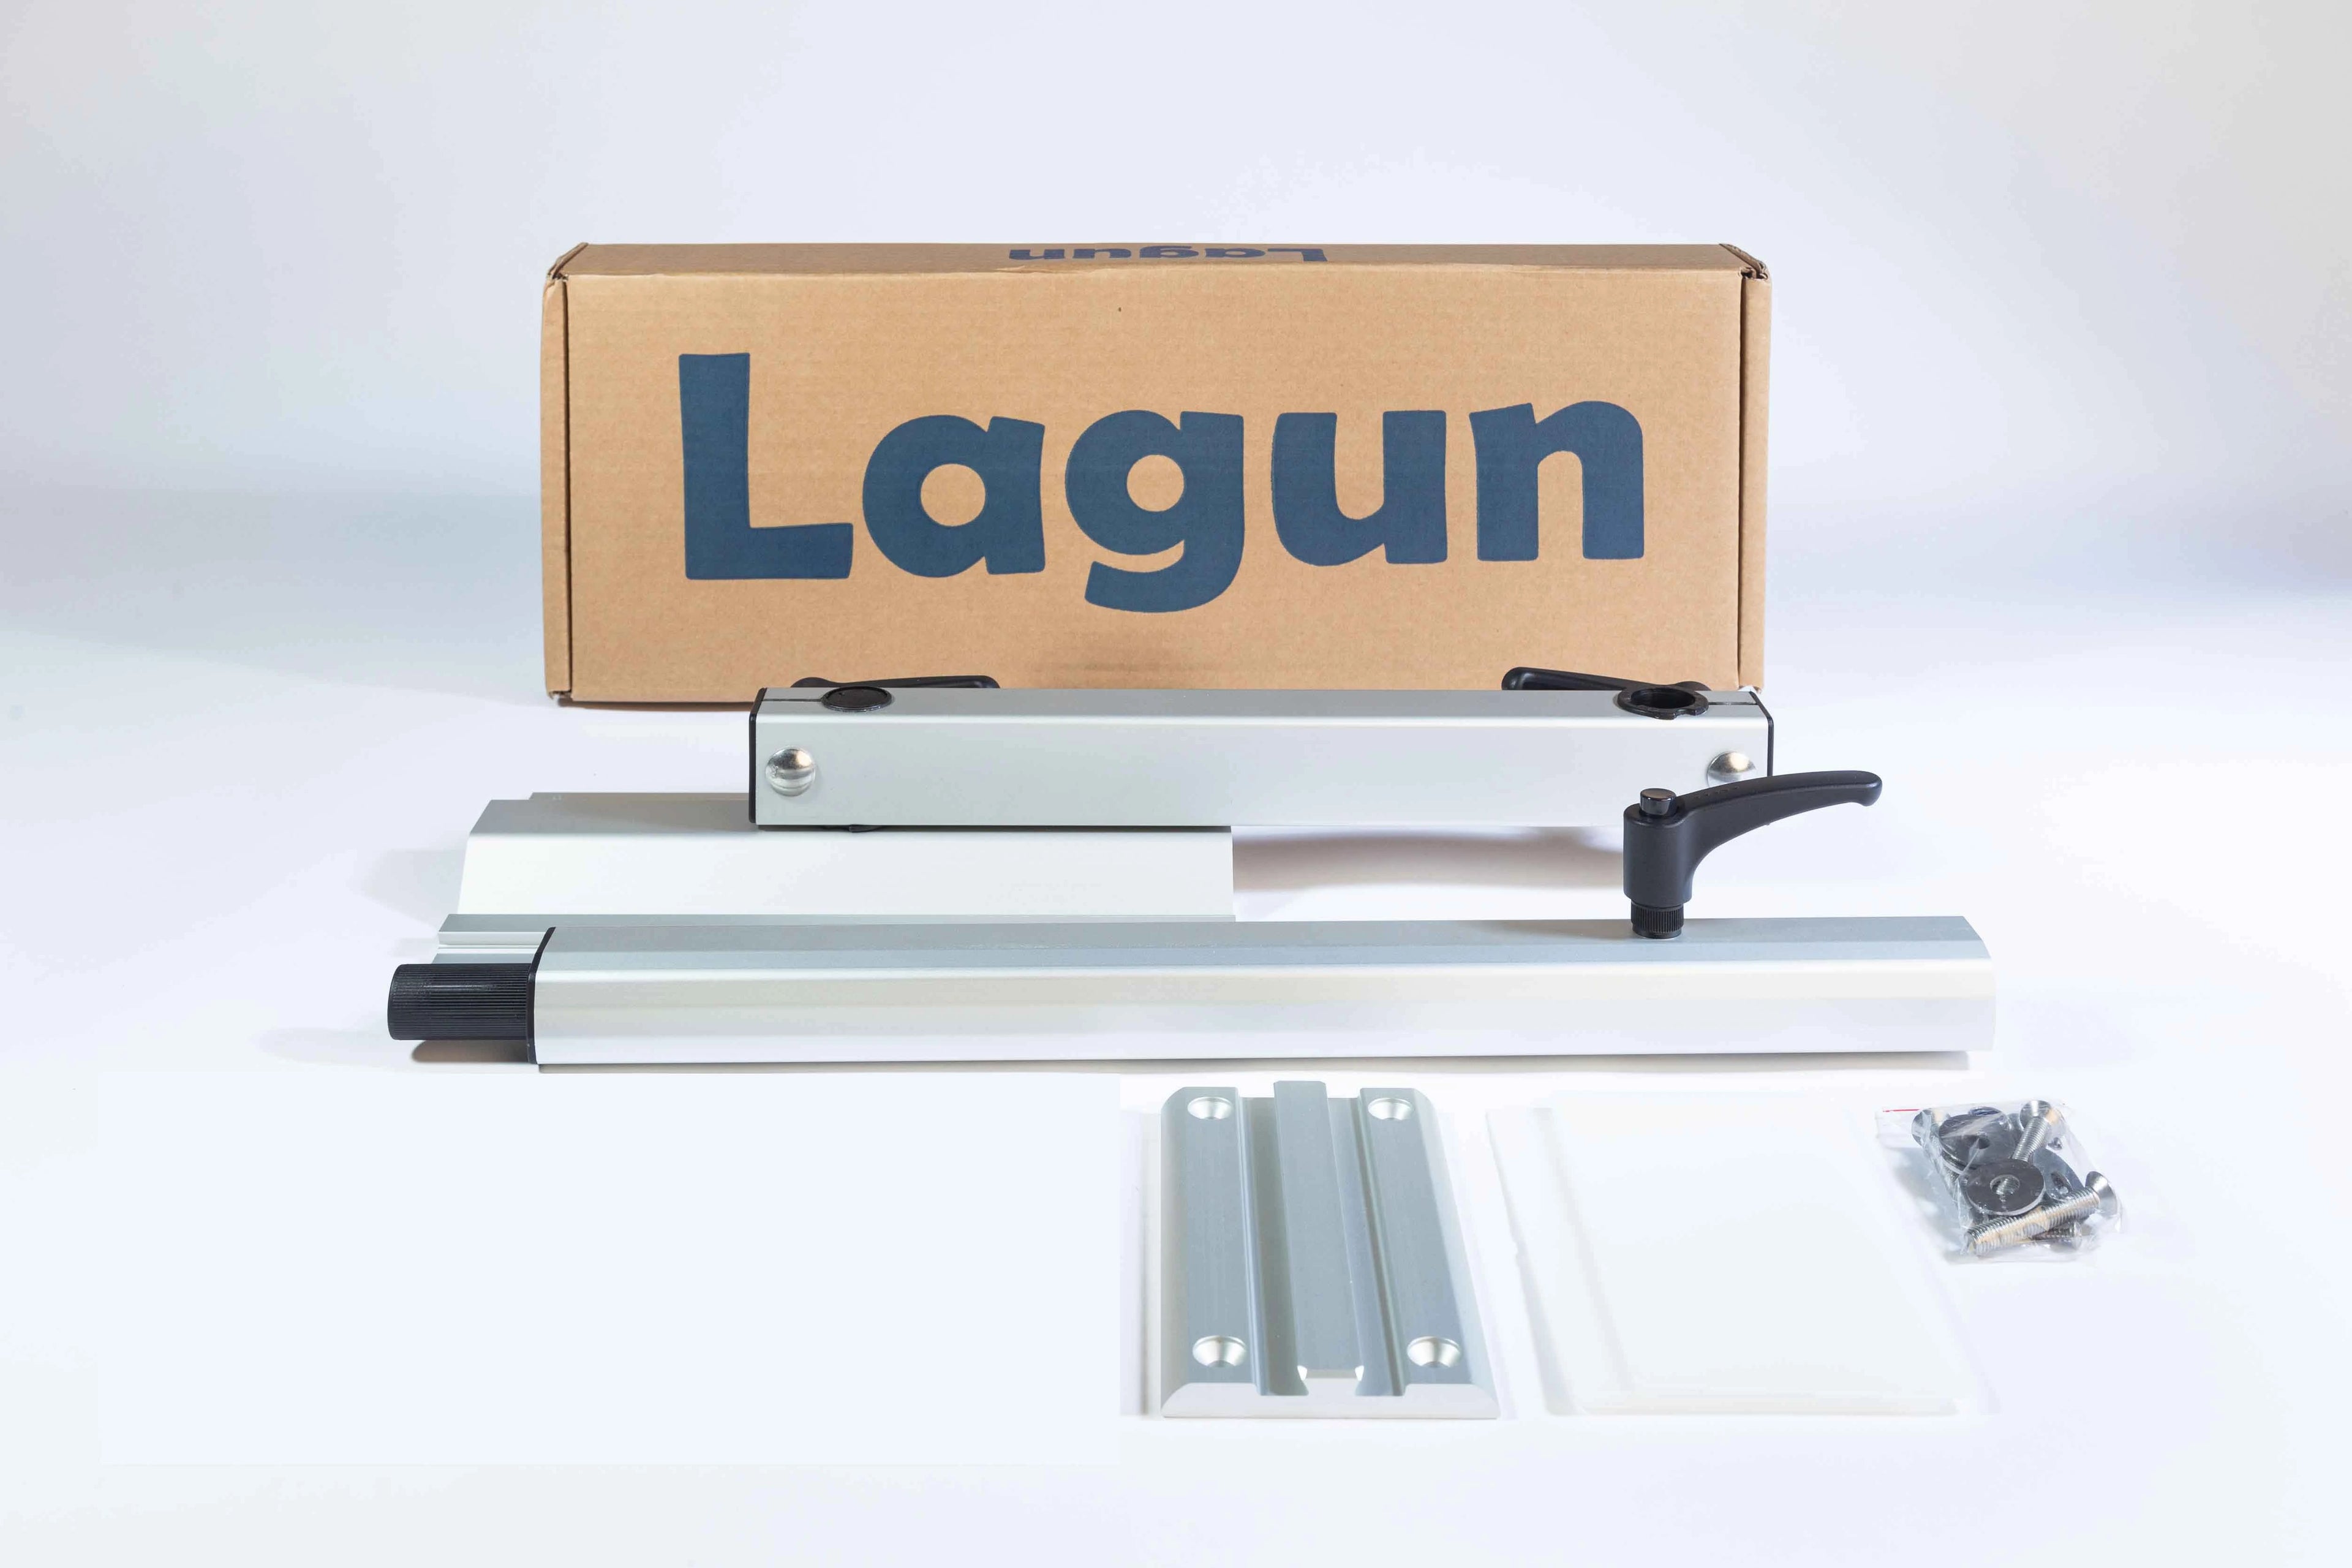 Lagun table frame with 400 mm table leg